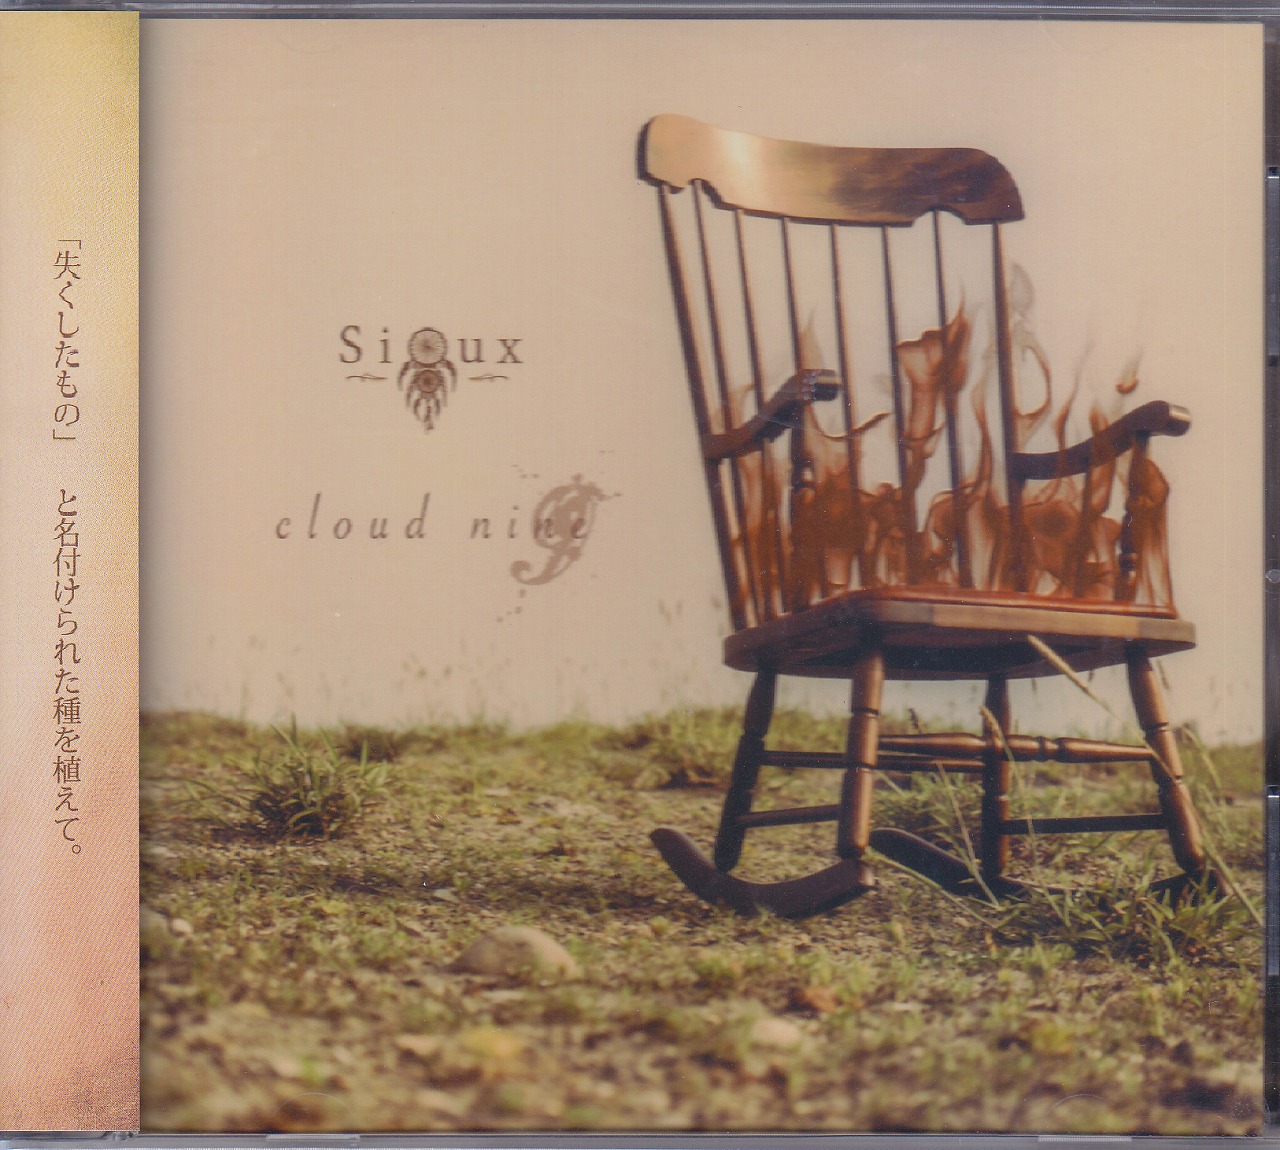 Sioux ( スー )  の CD cloud nine